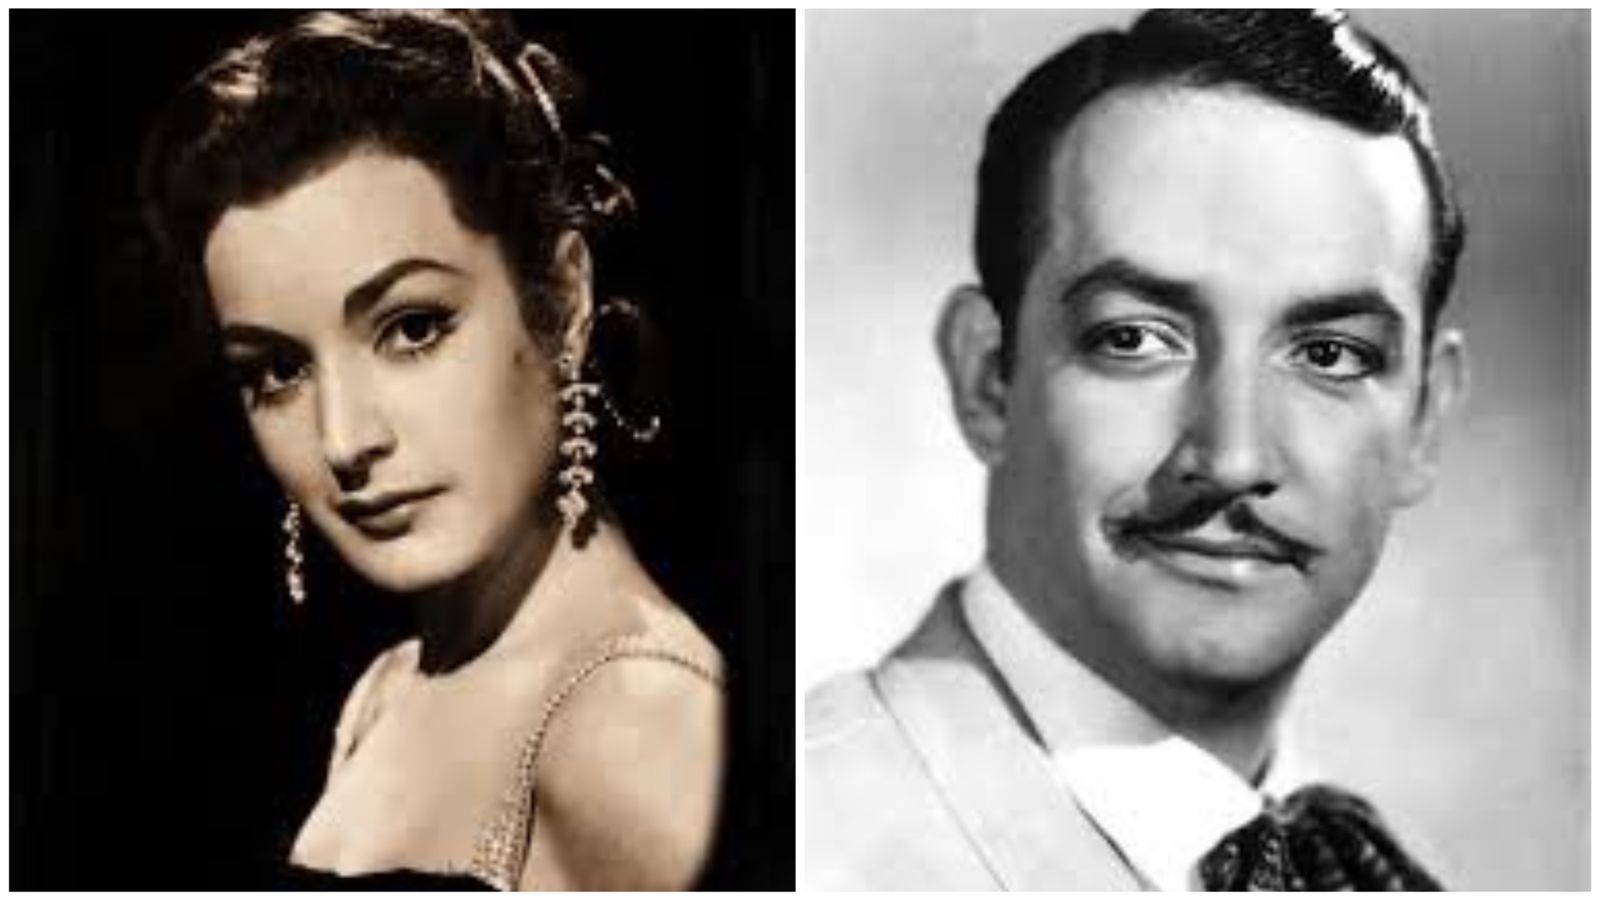 La actriz mantuvo un romance con Jorge Negrete en 1948 